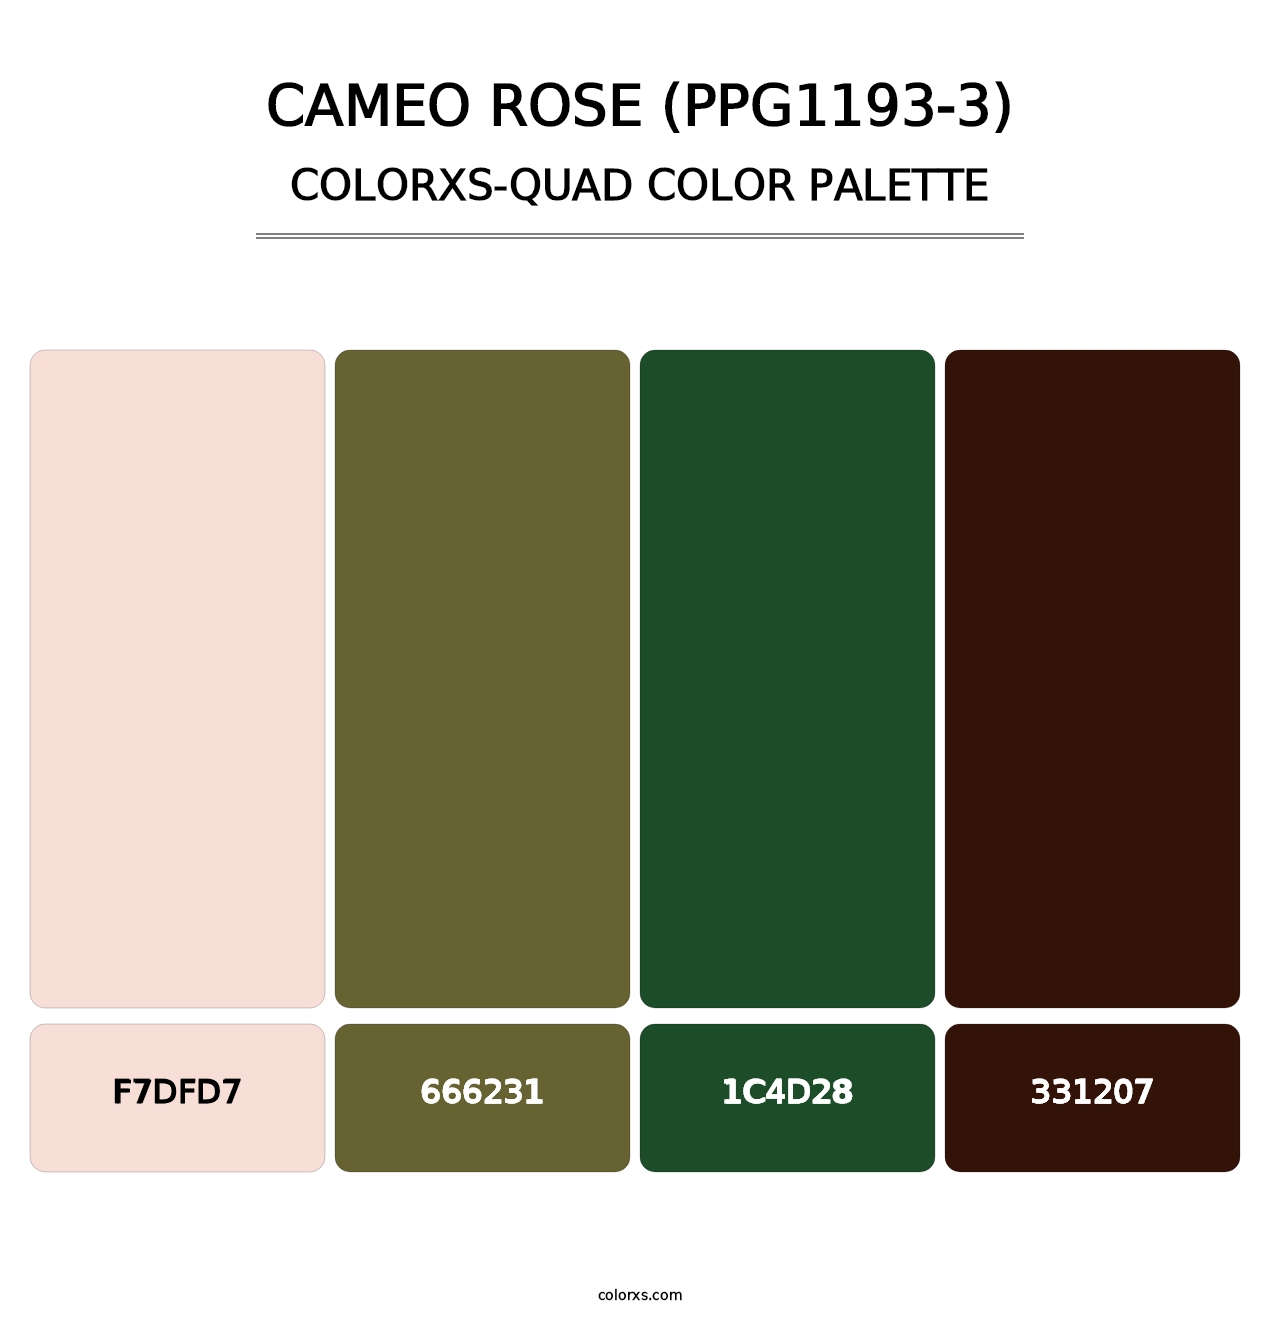 Cameo Rose (PPG1193-3) - Colorxs Quad Palette